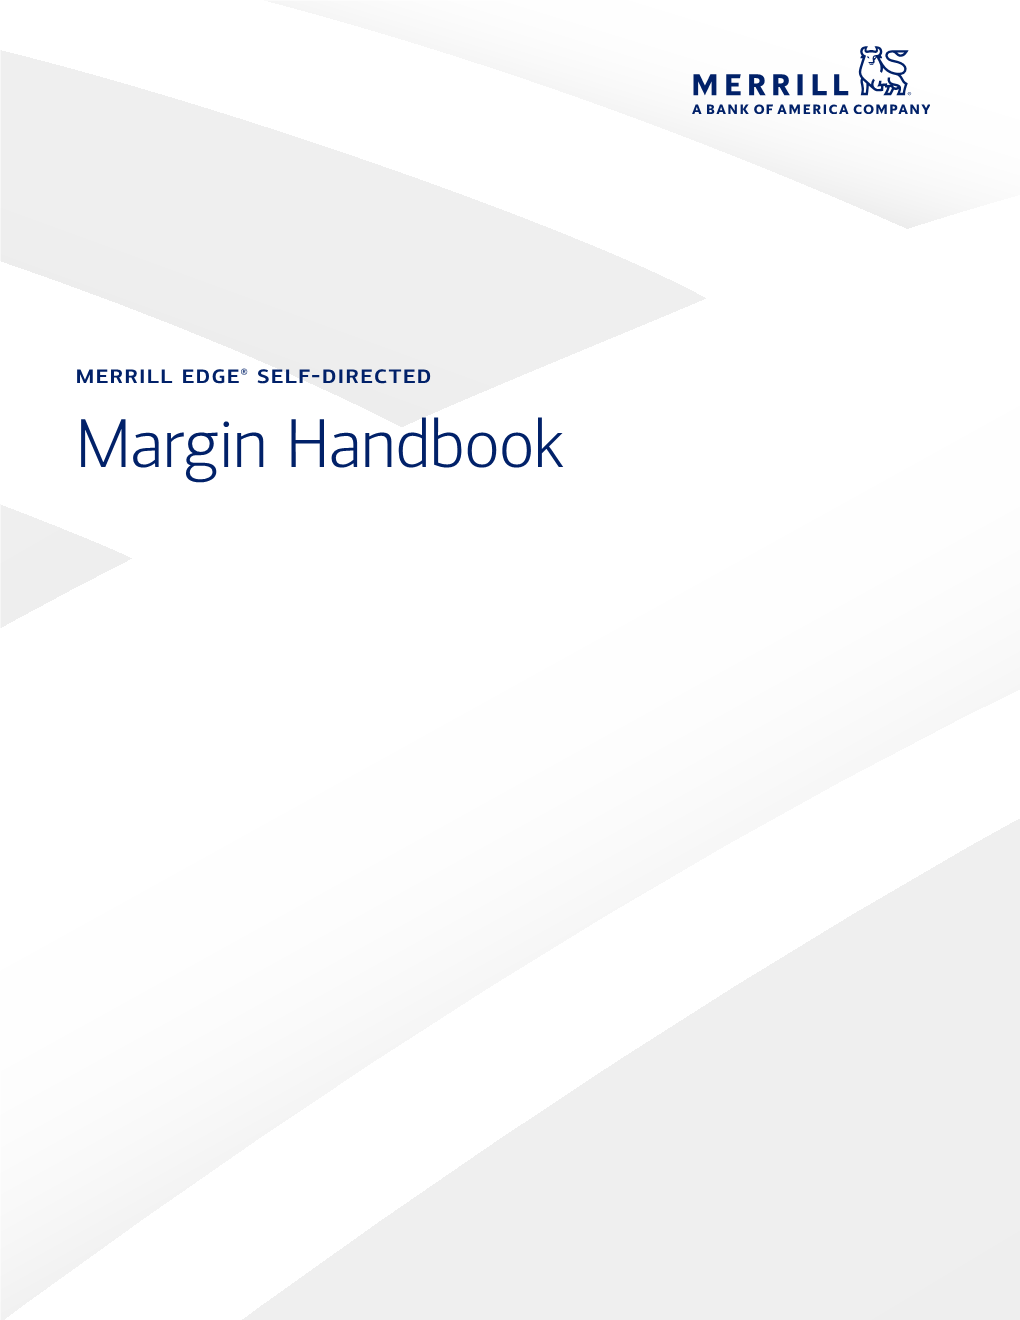 Margin Handbook Margin Risk Disclosure Statement in Accordance with Requirements of FINRA, Merrill Is Furnishing This Margin Risks Disclosure Statement